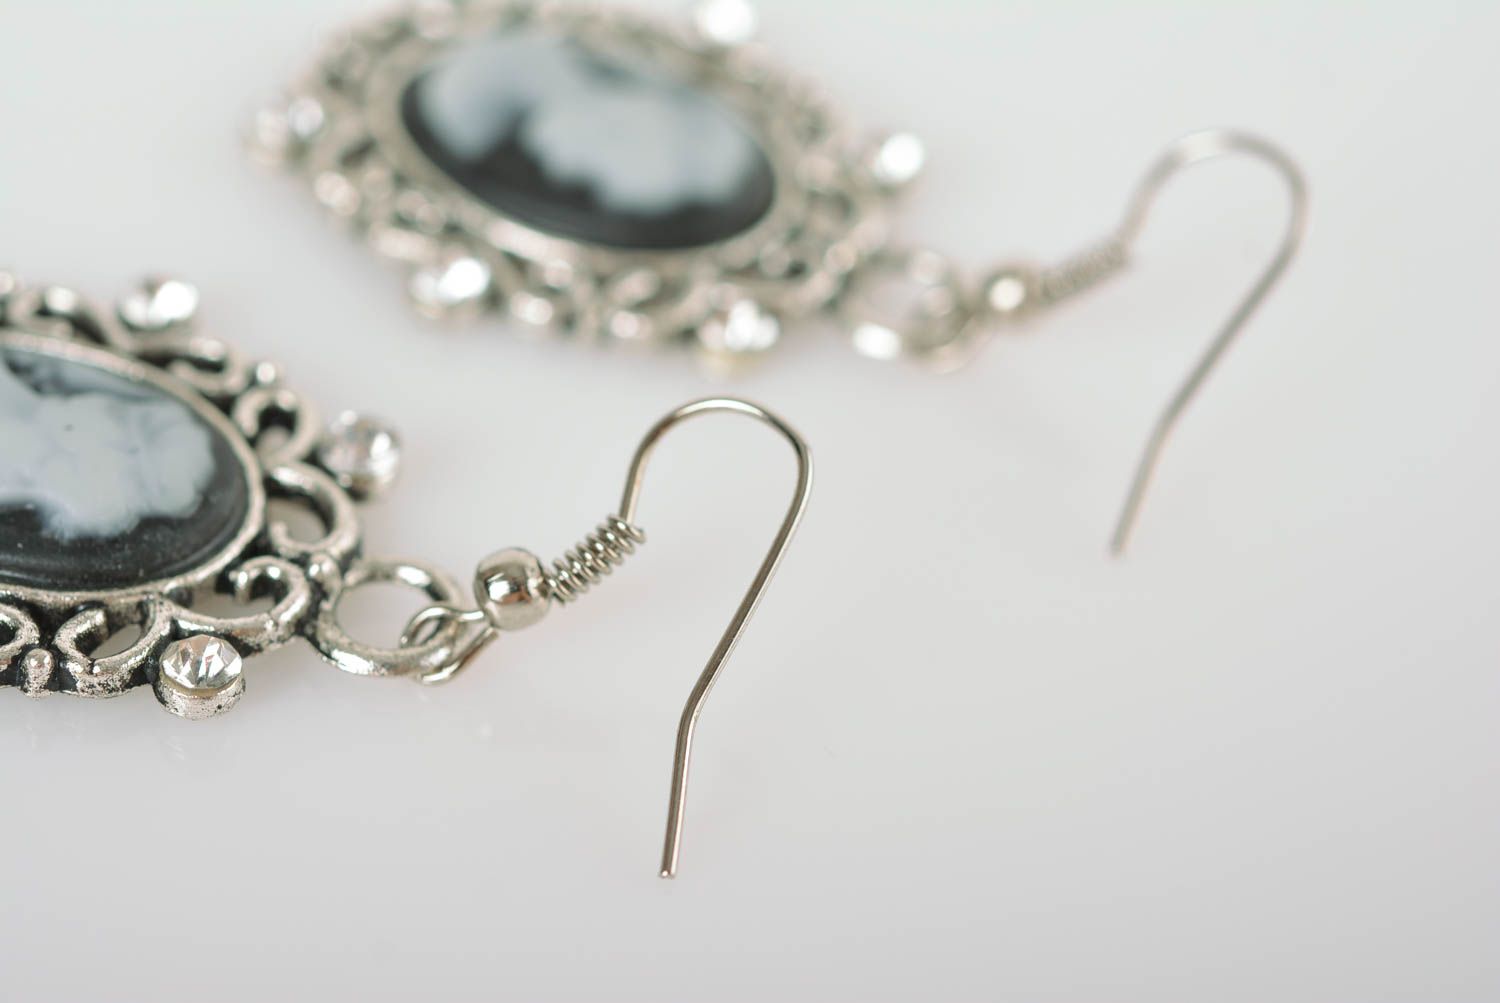 Handmade polymer clay earrings designer beautiful jewelry earrings with charms photo 4